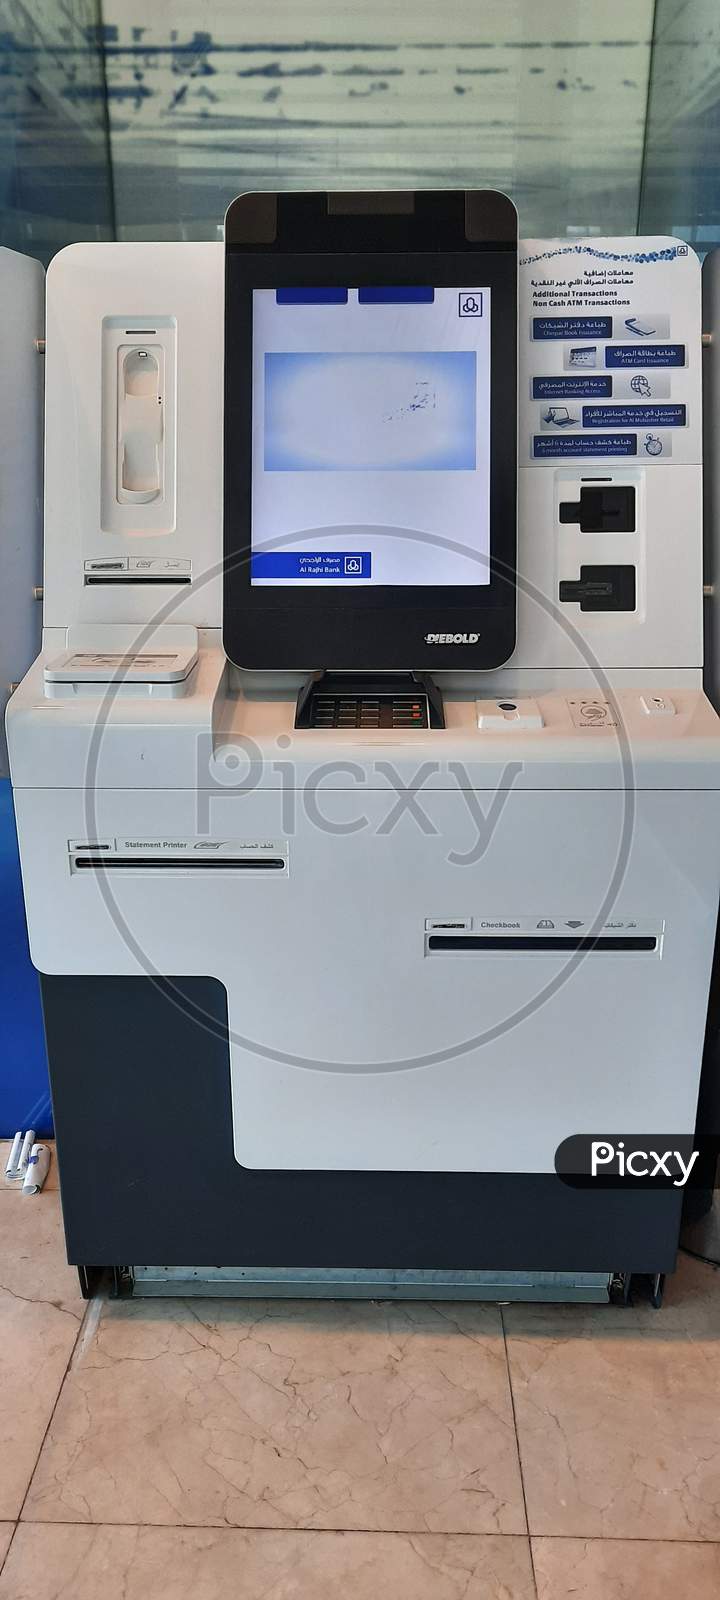 Atm card printed machine